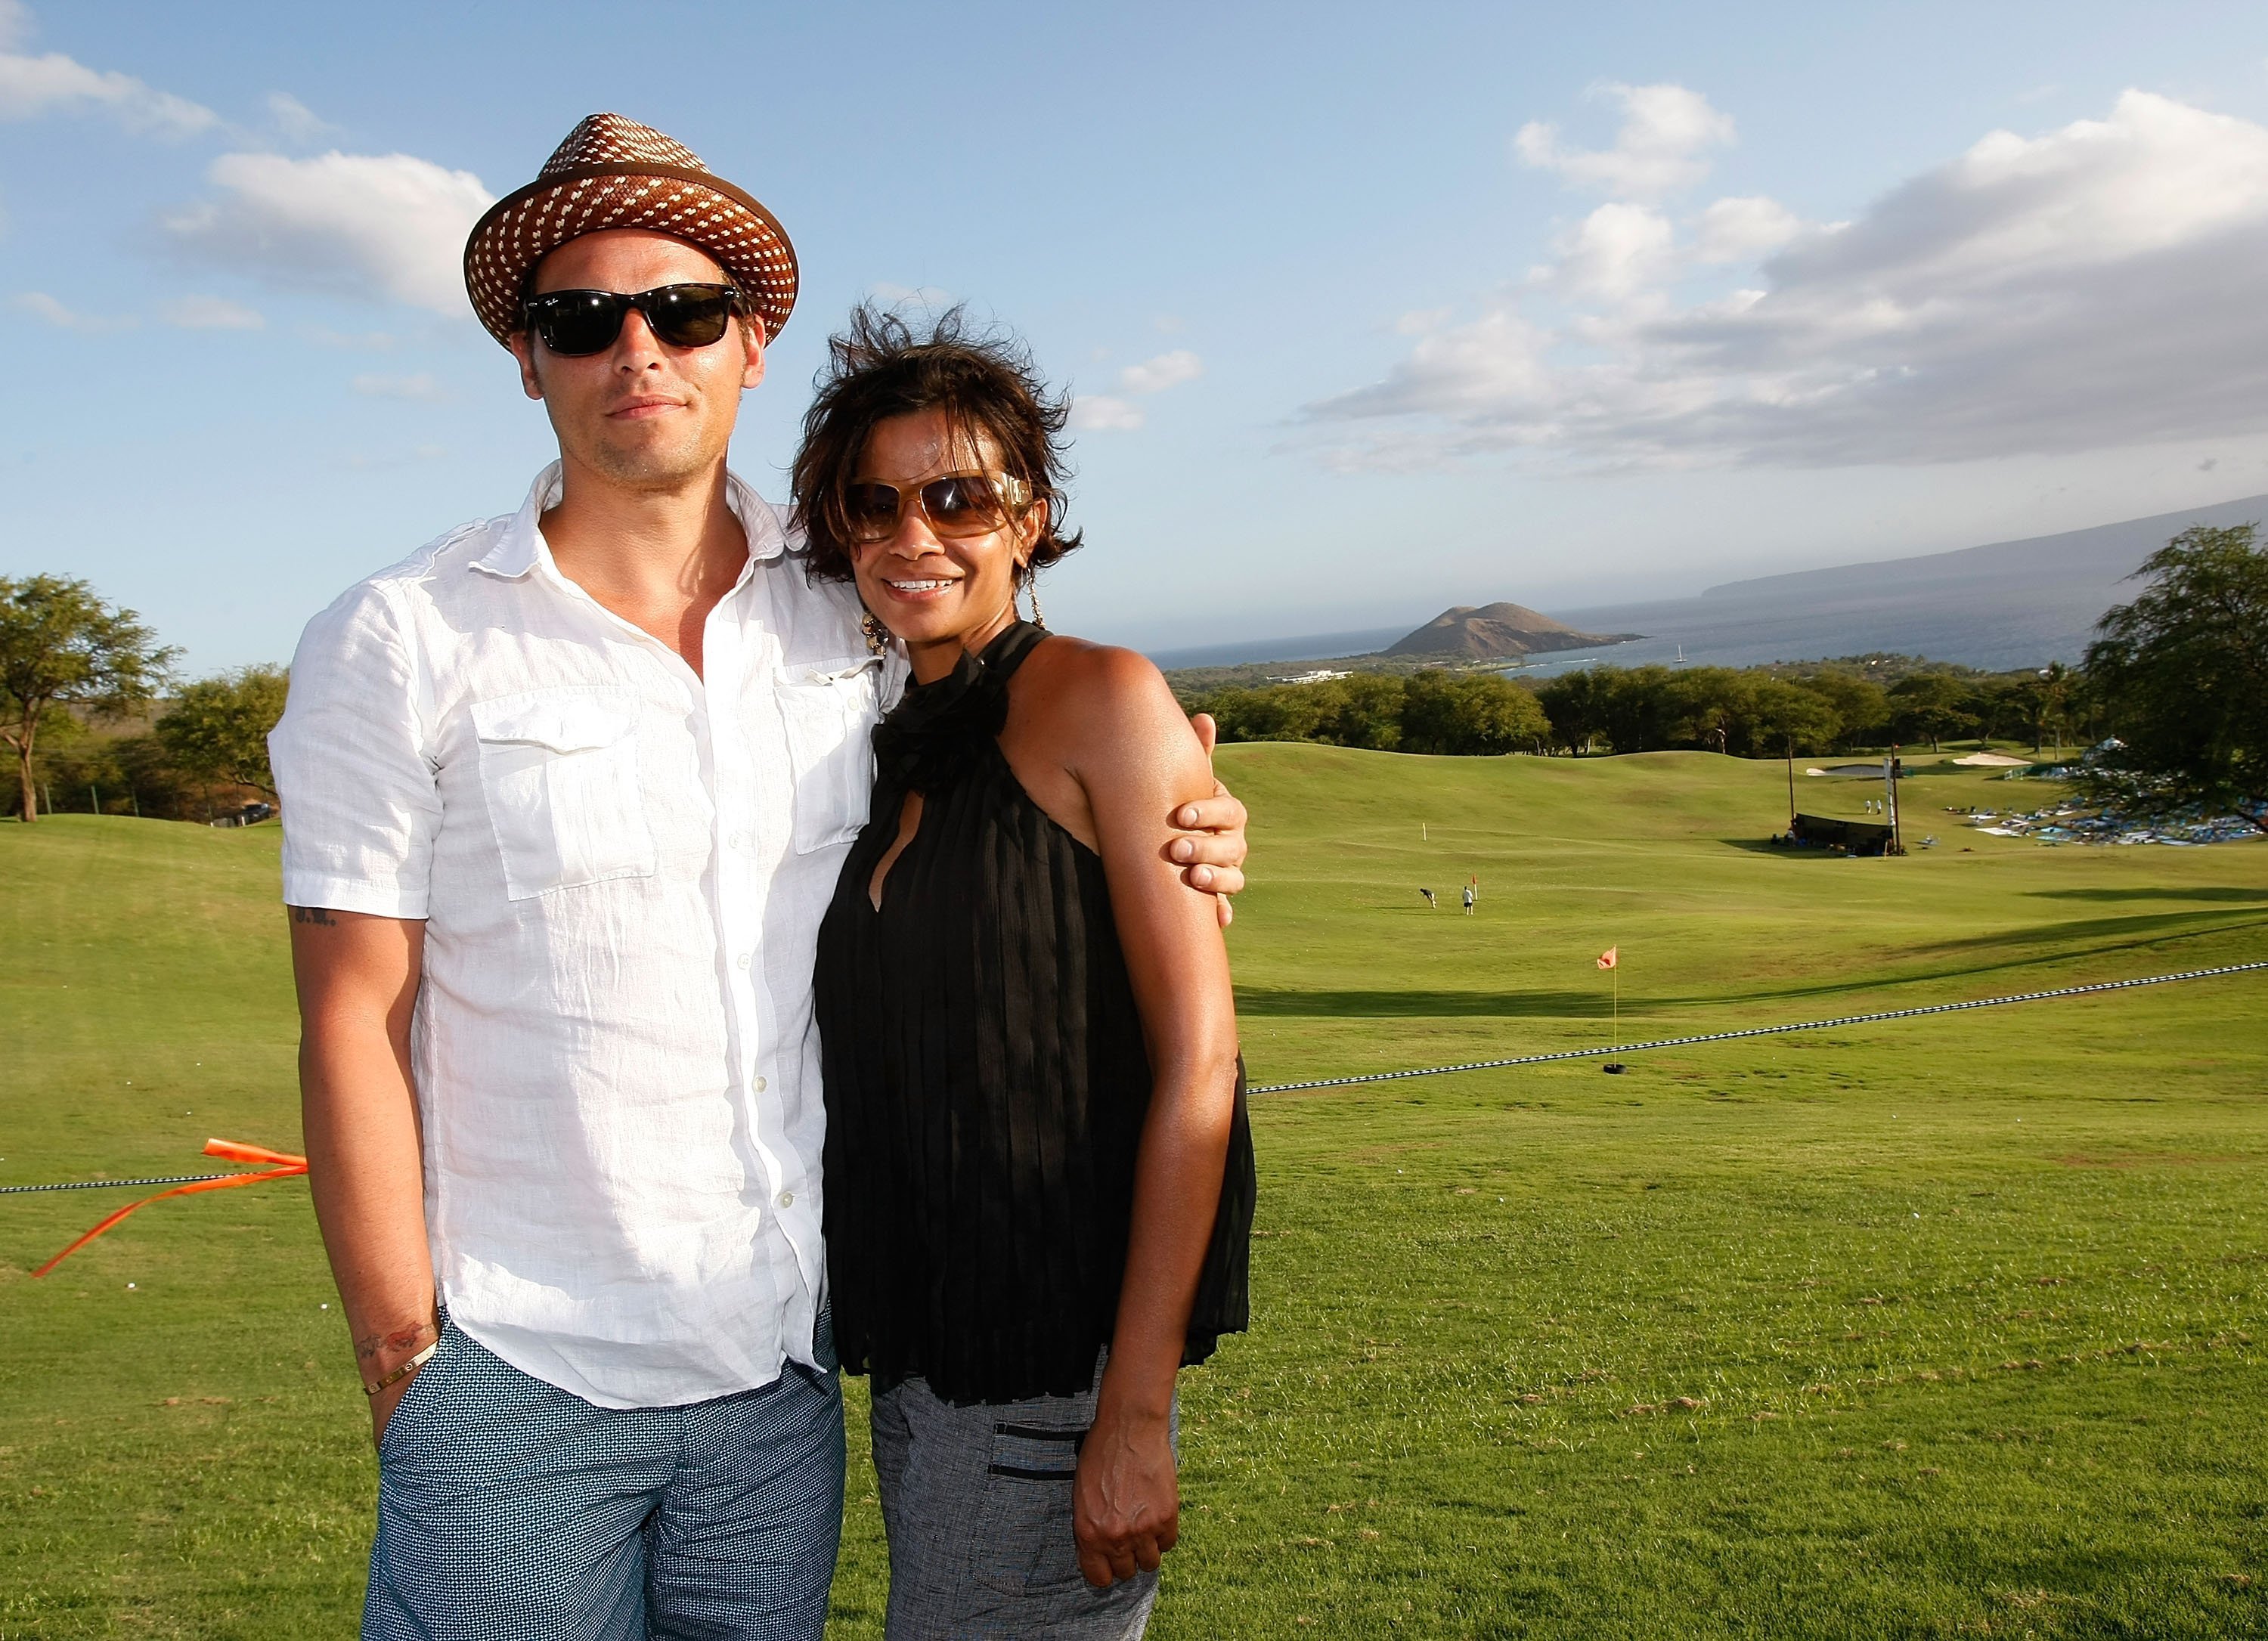 Justin Chambers and Keisha Chambers on June 20, 2009 in Wailea, Hawaii | Source: Getty Images